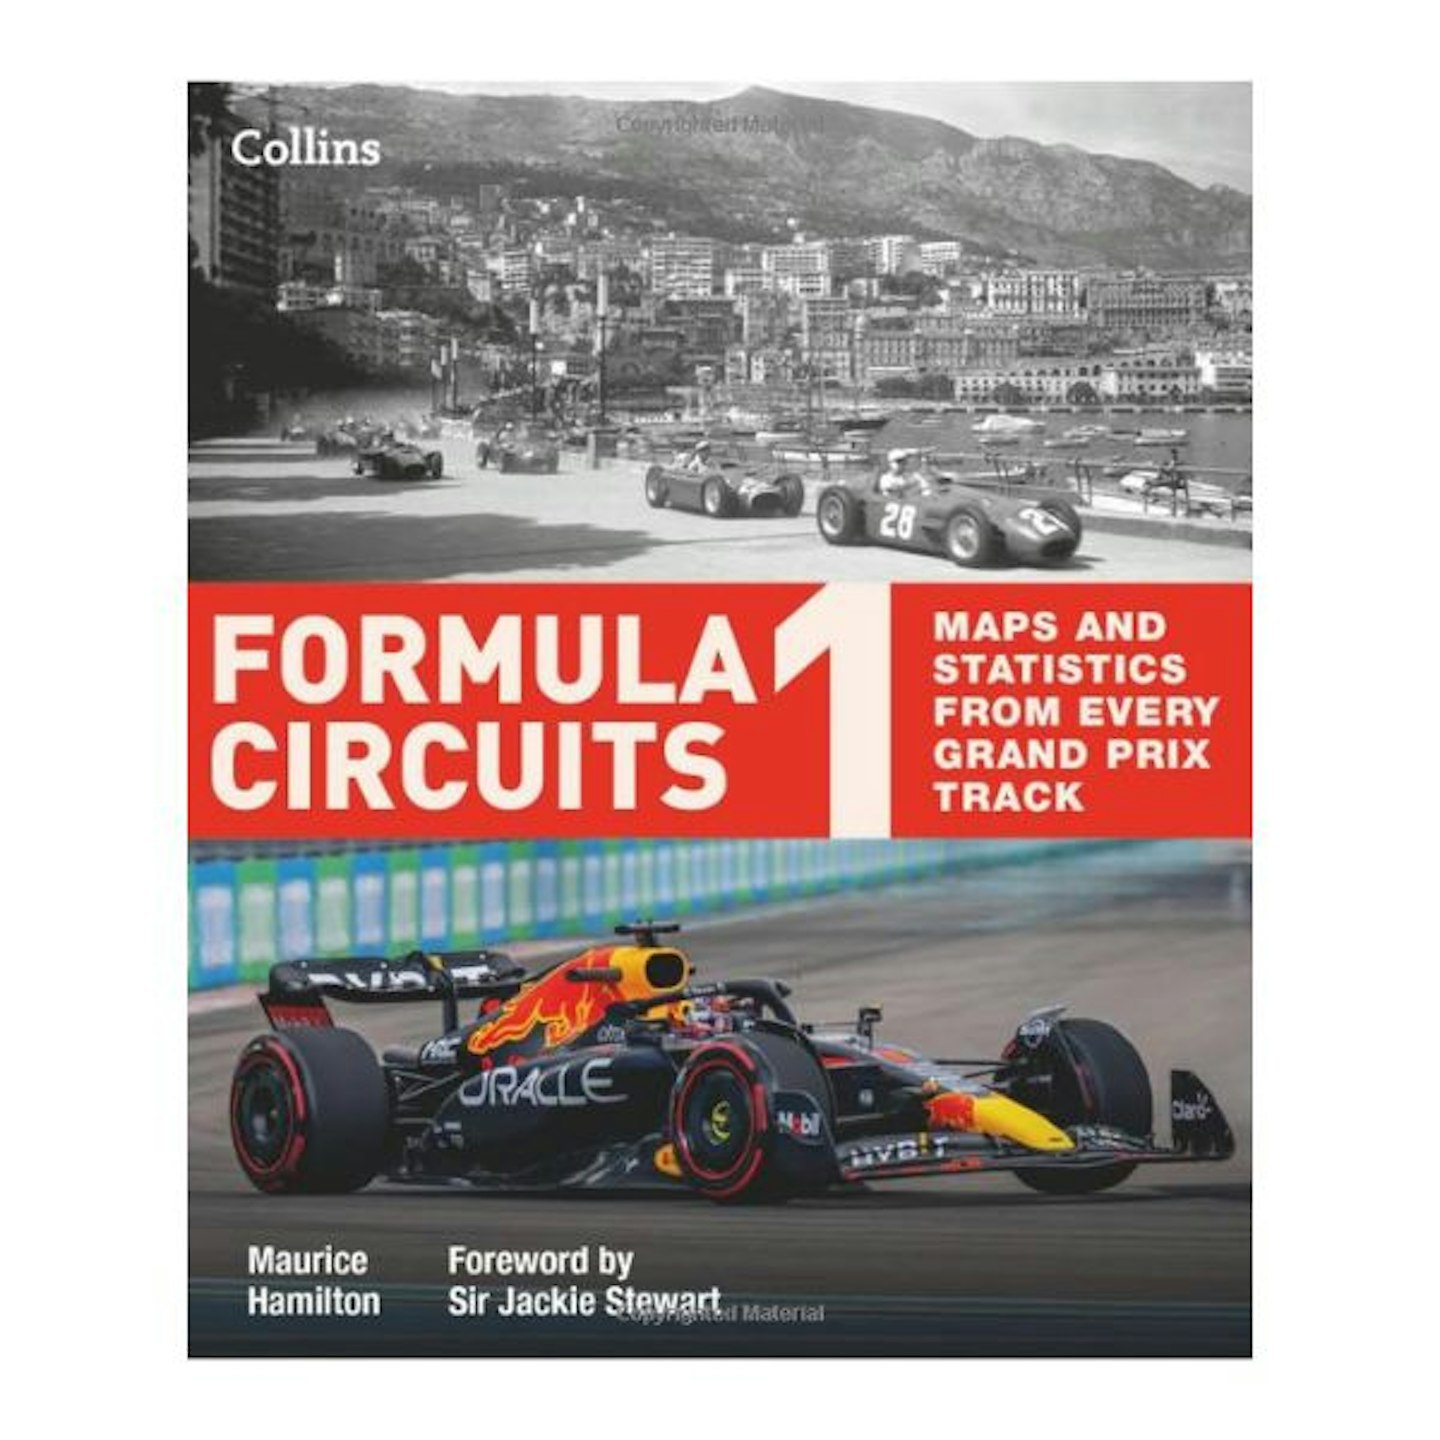 Formula 1 Circuits by Maurice Hamilton